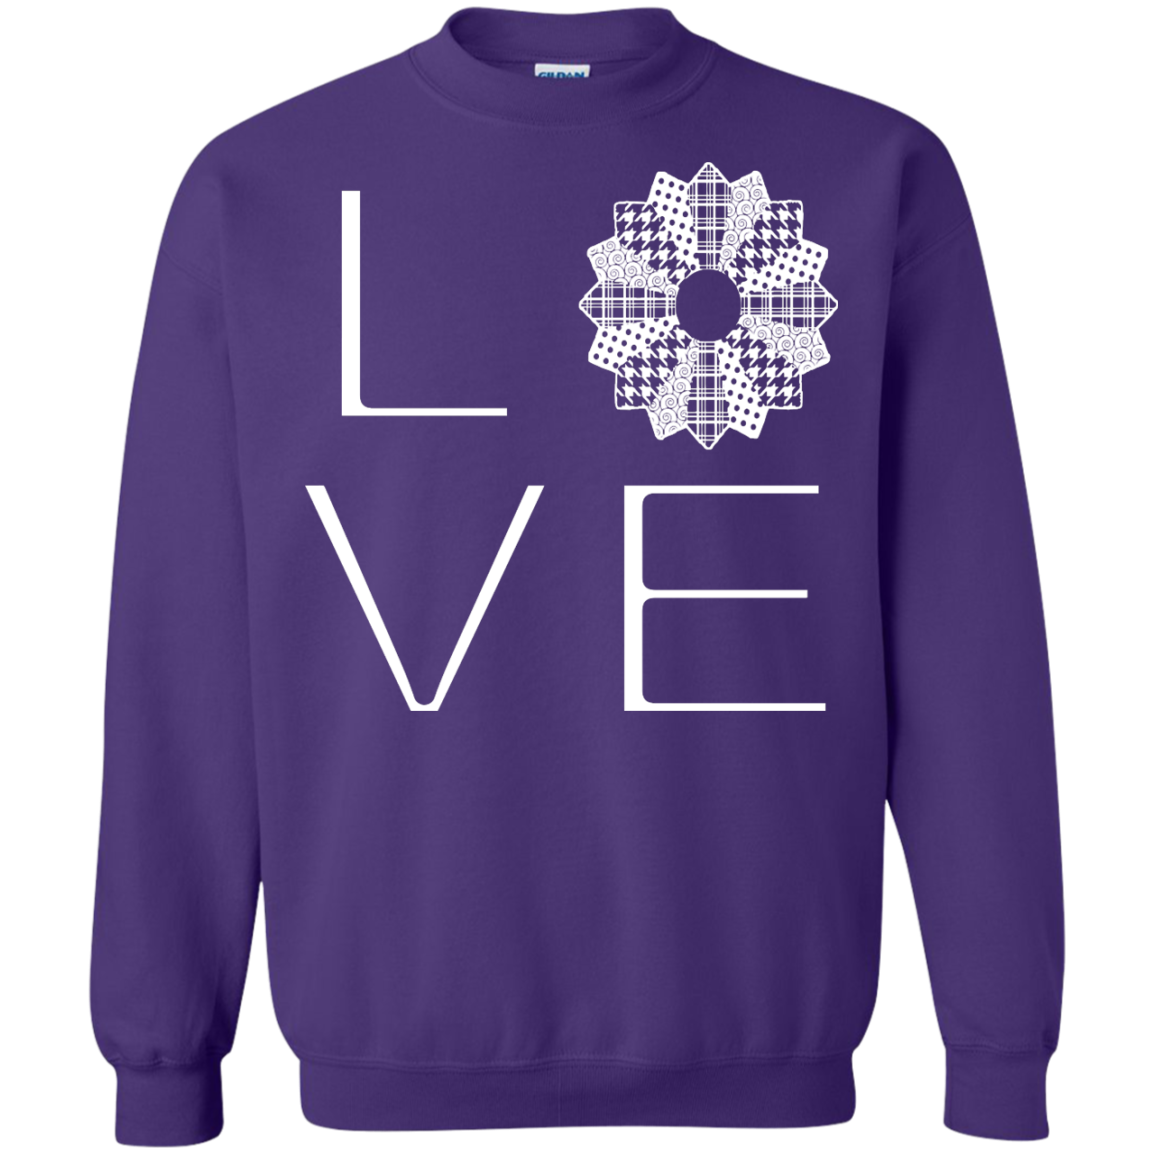 LOVE Quilting Crewneck Sweatshirts - Crafter4Life - 7